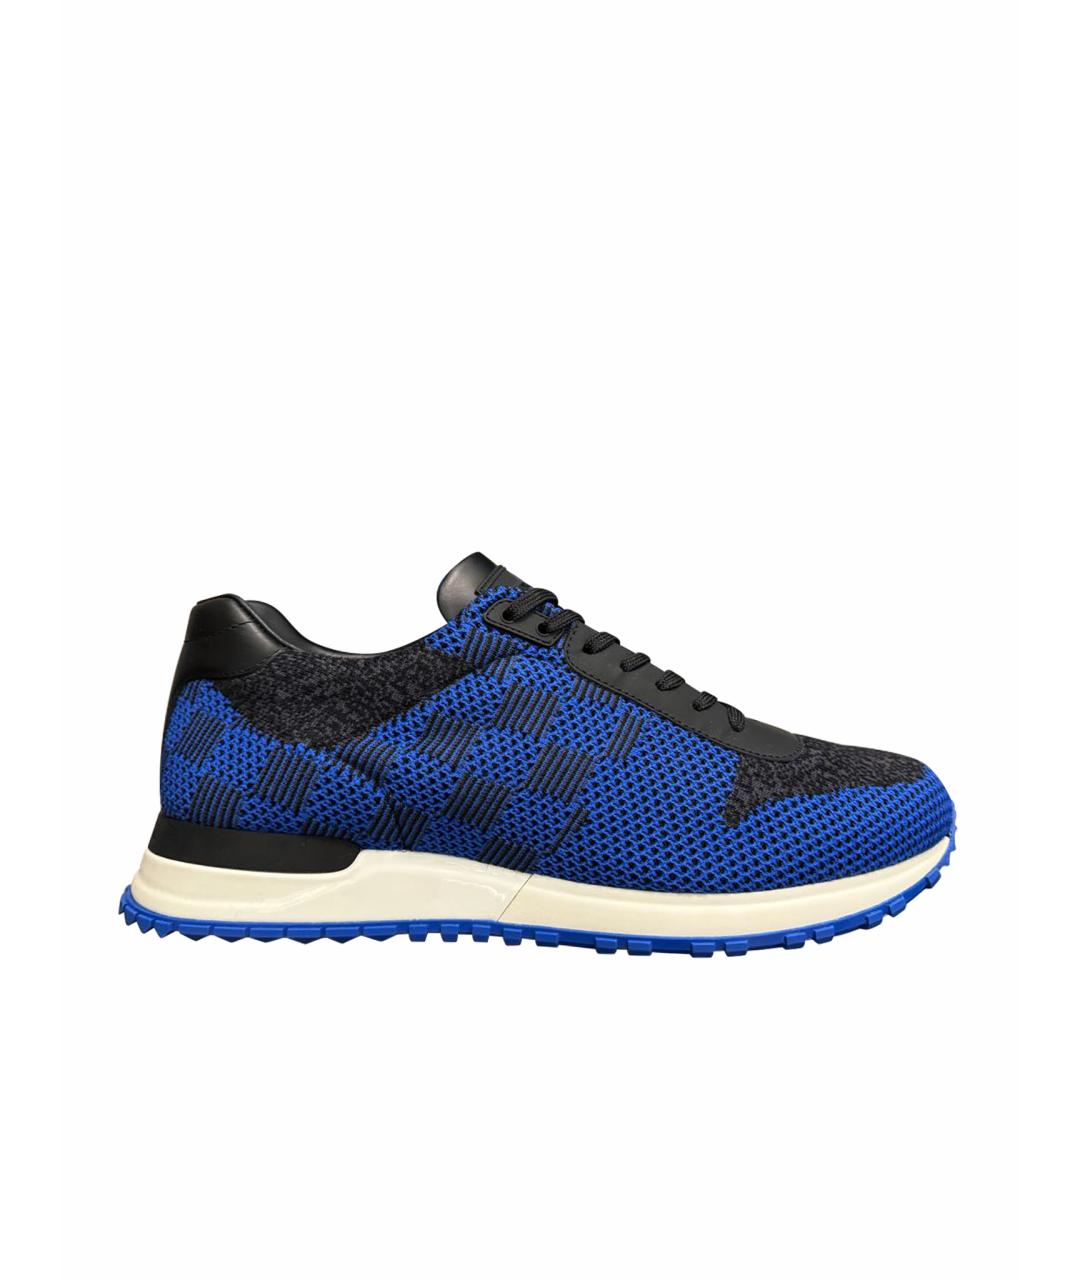 LOUIS VUITTON PRE-OWNED Синие синтетические низкие кроссовки / кеды, фото 1